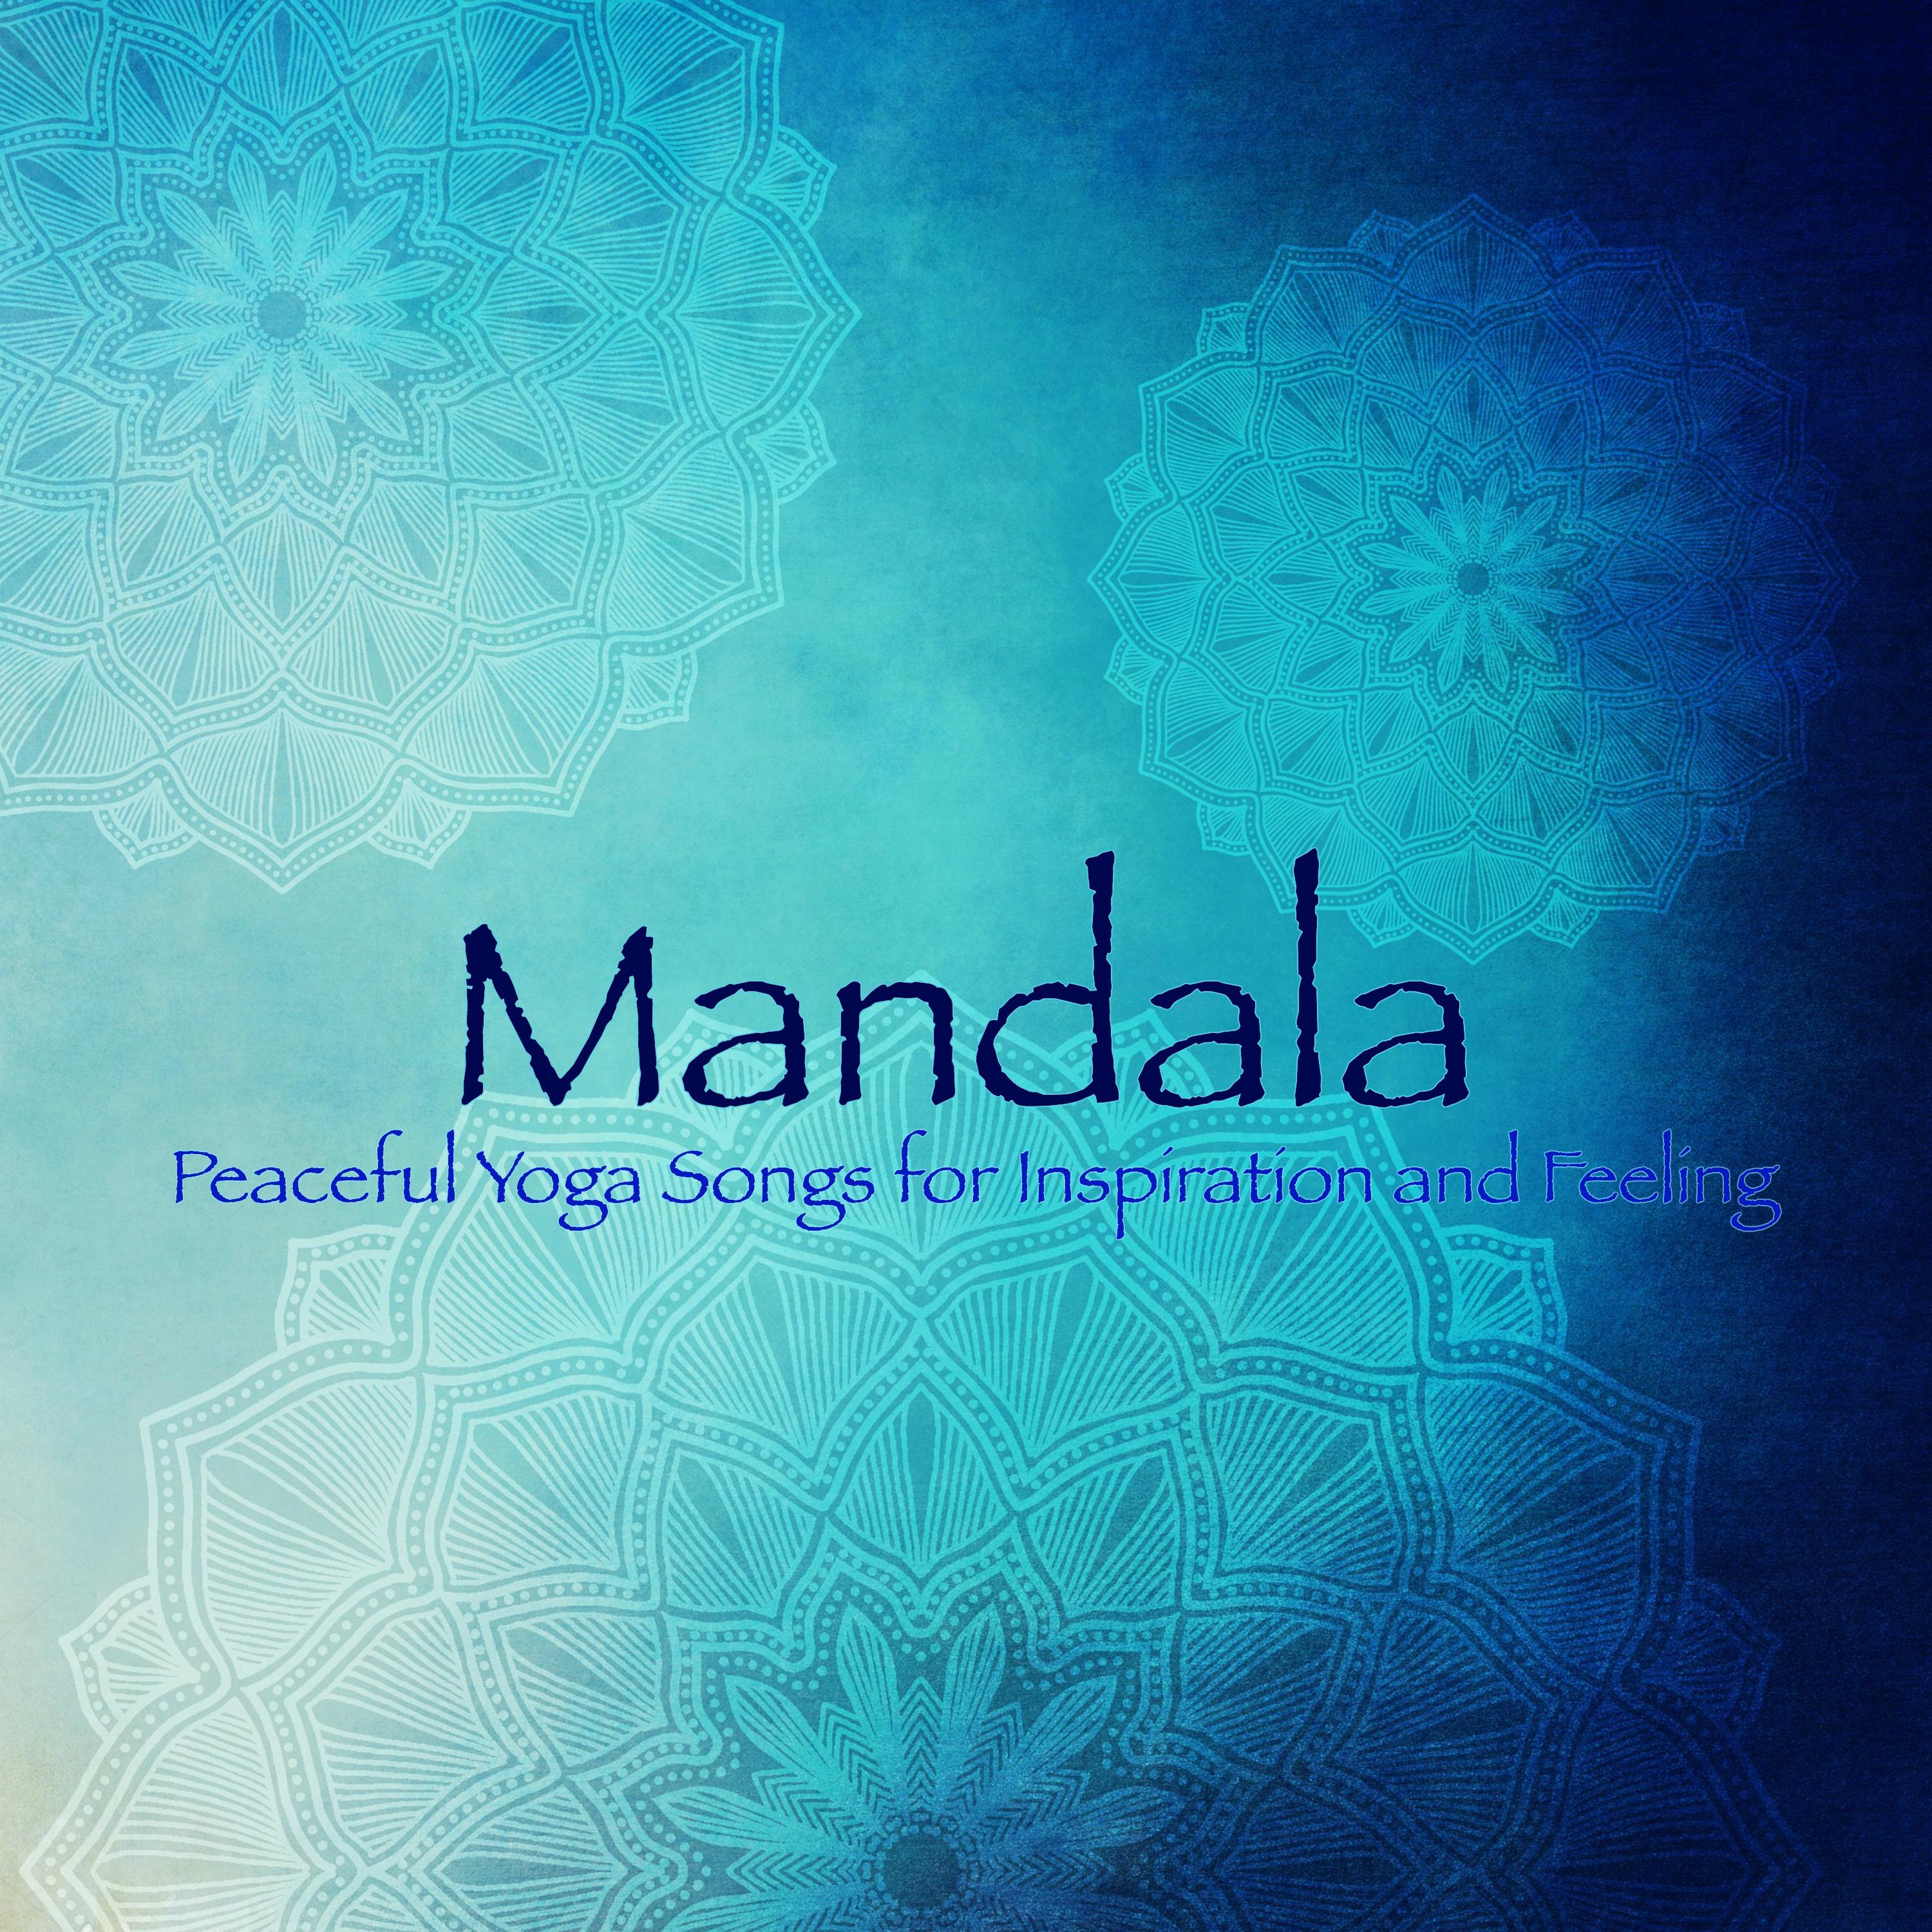 Mandala  Peaceful Yoga Songs for Inspiration and Feeling